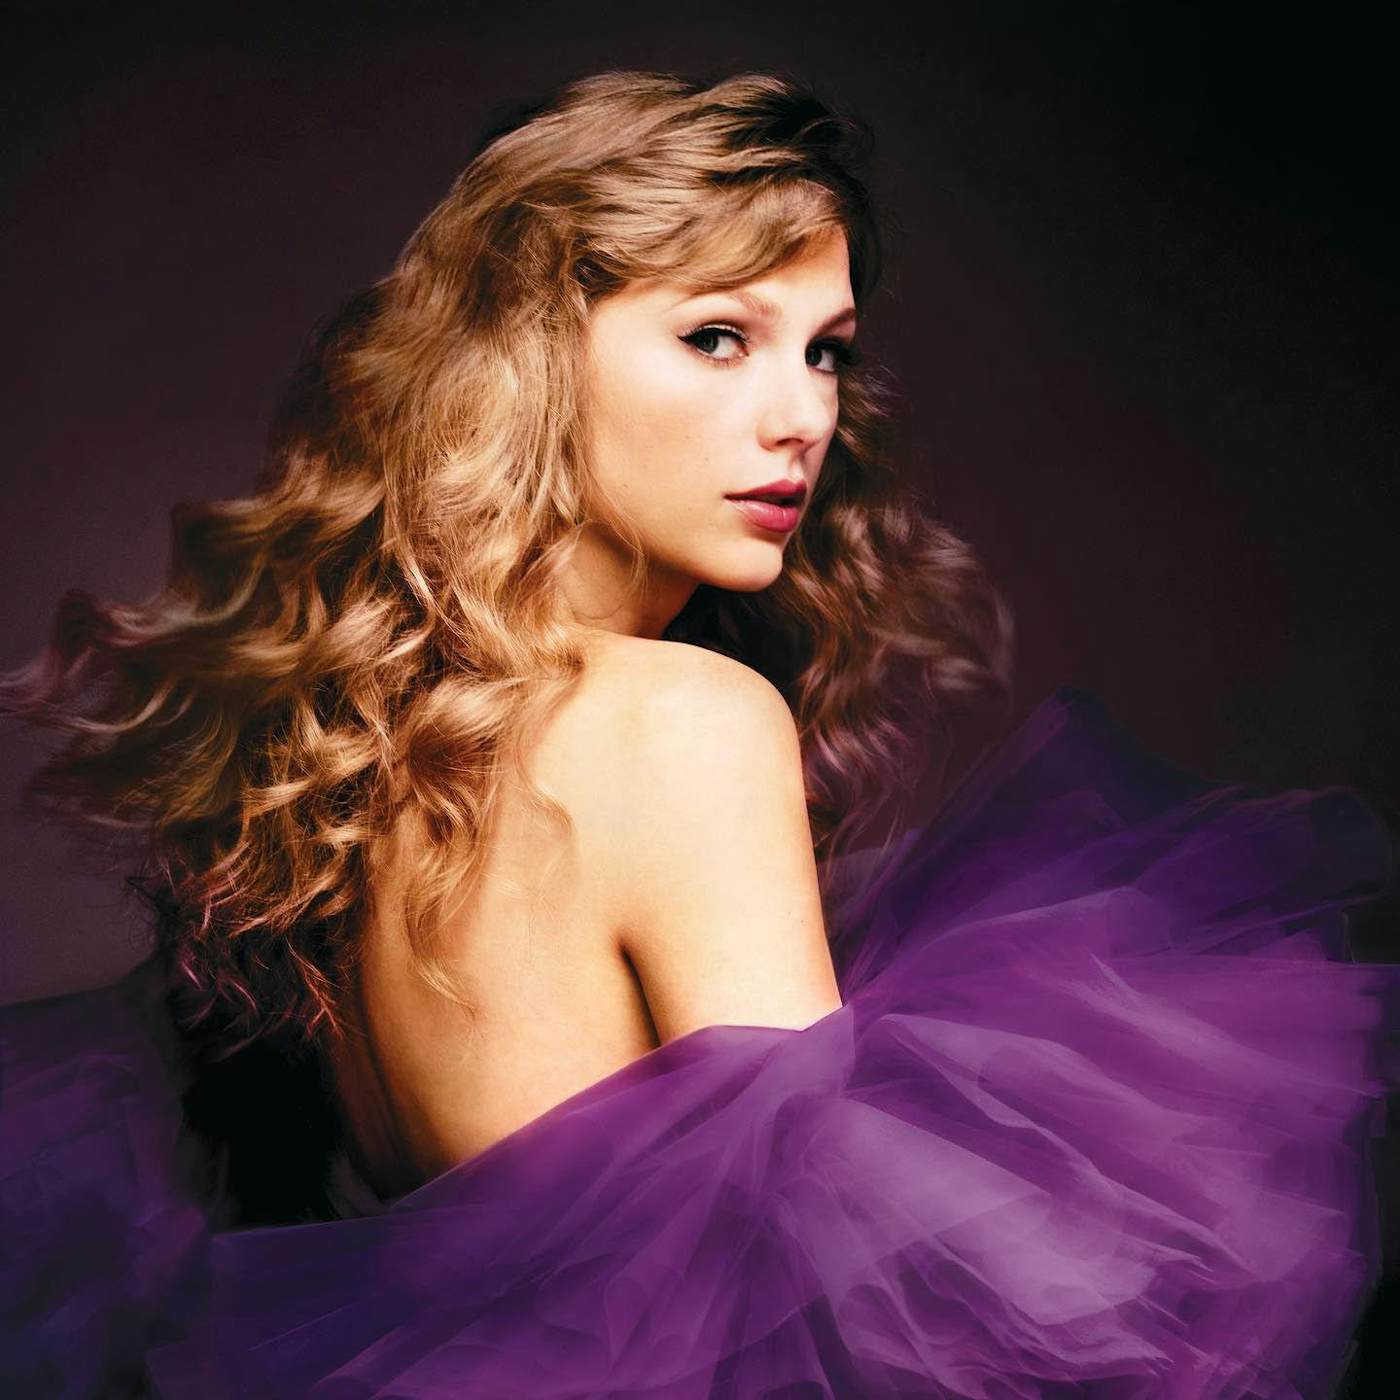 Taylor Swift Speak Now (Taylor's Version/Orchid Marble/3LP) Vinyl Record